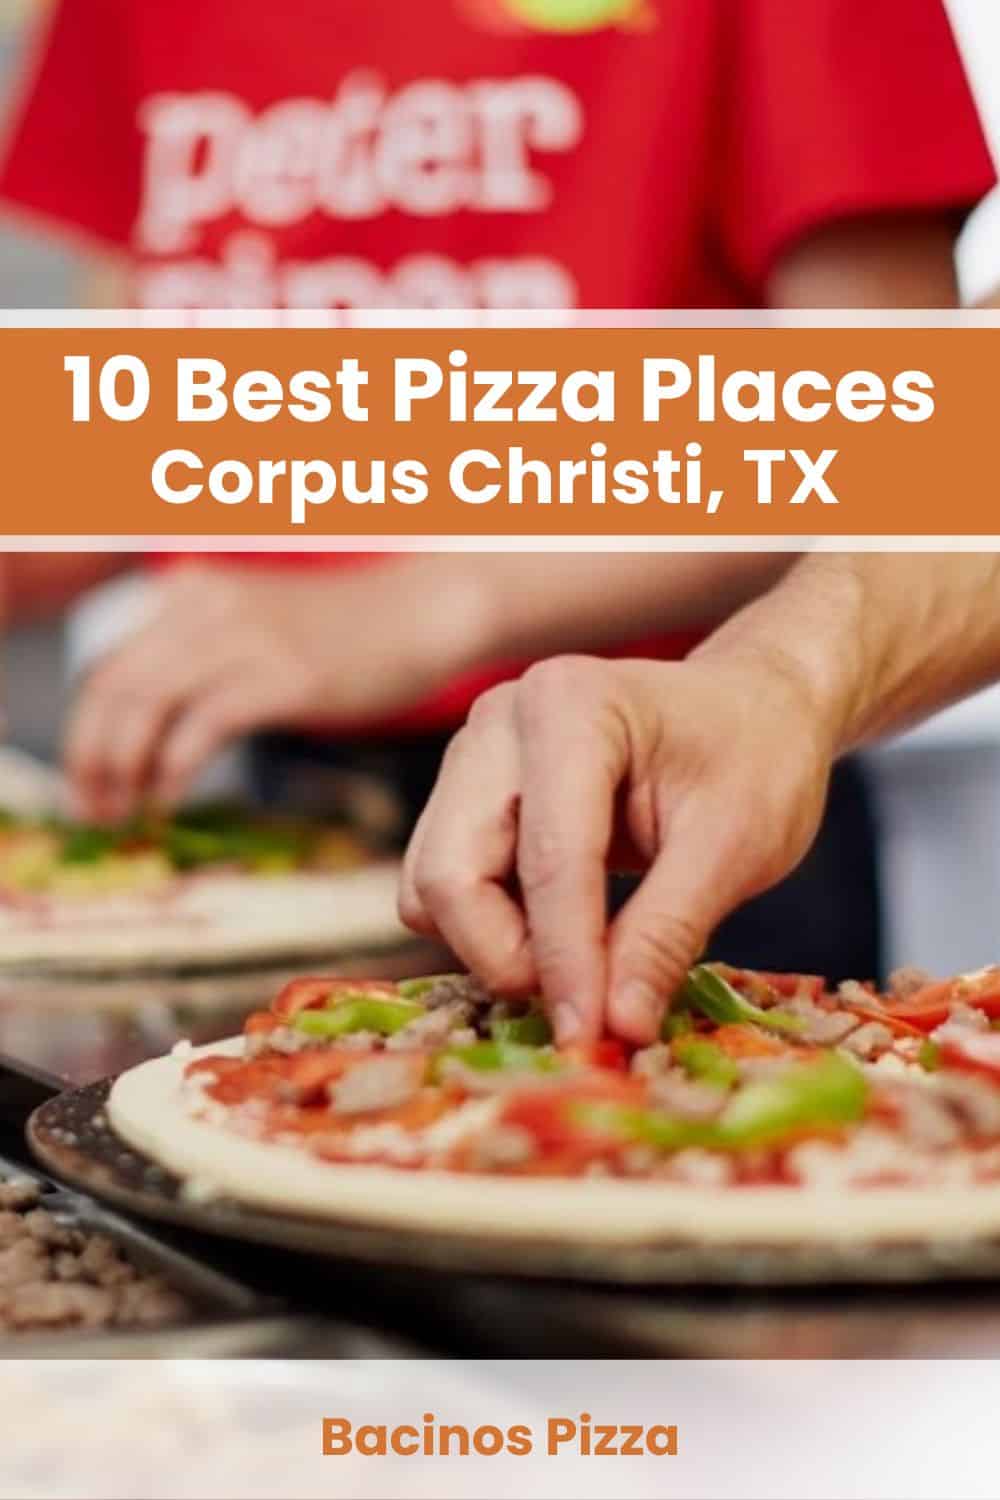 Best Pizza Restaurants in Corpus Christi